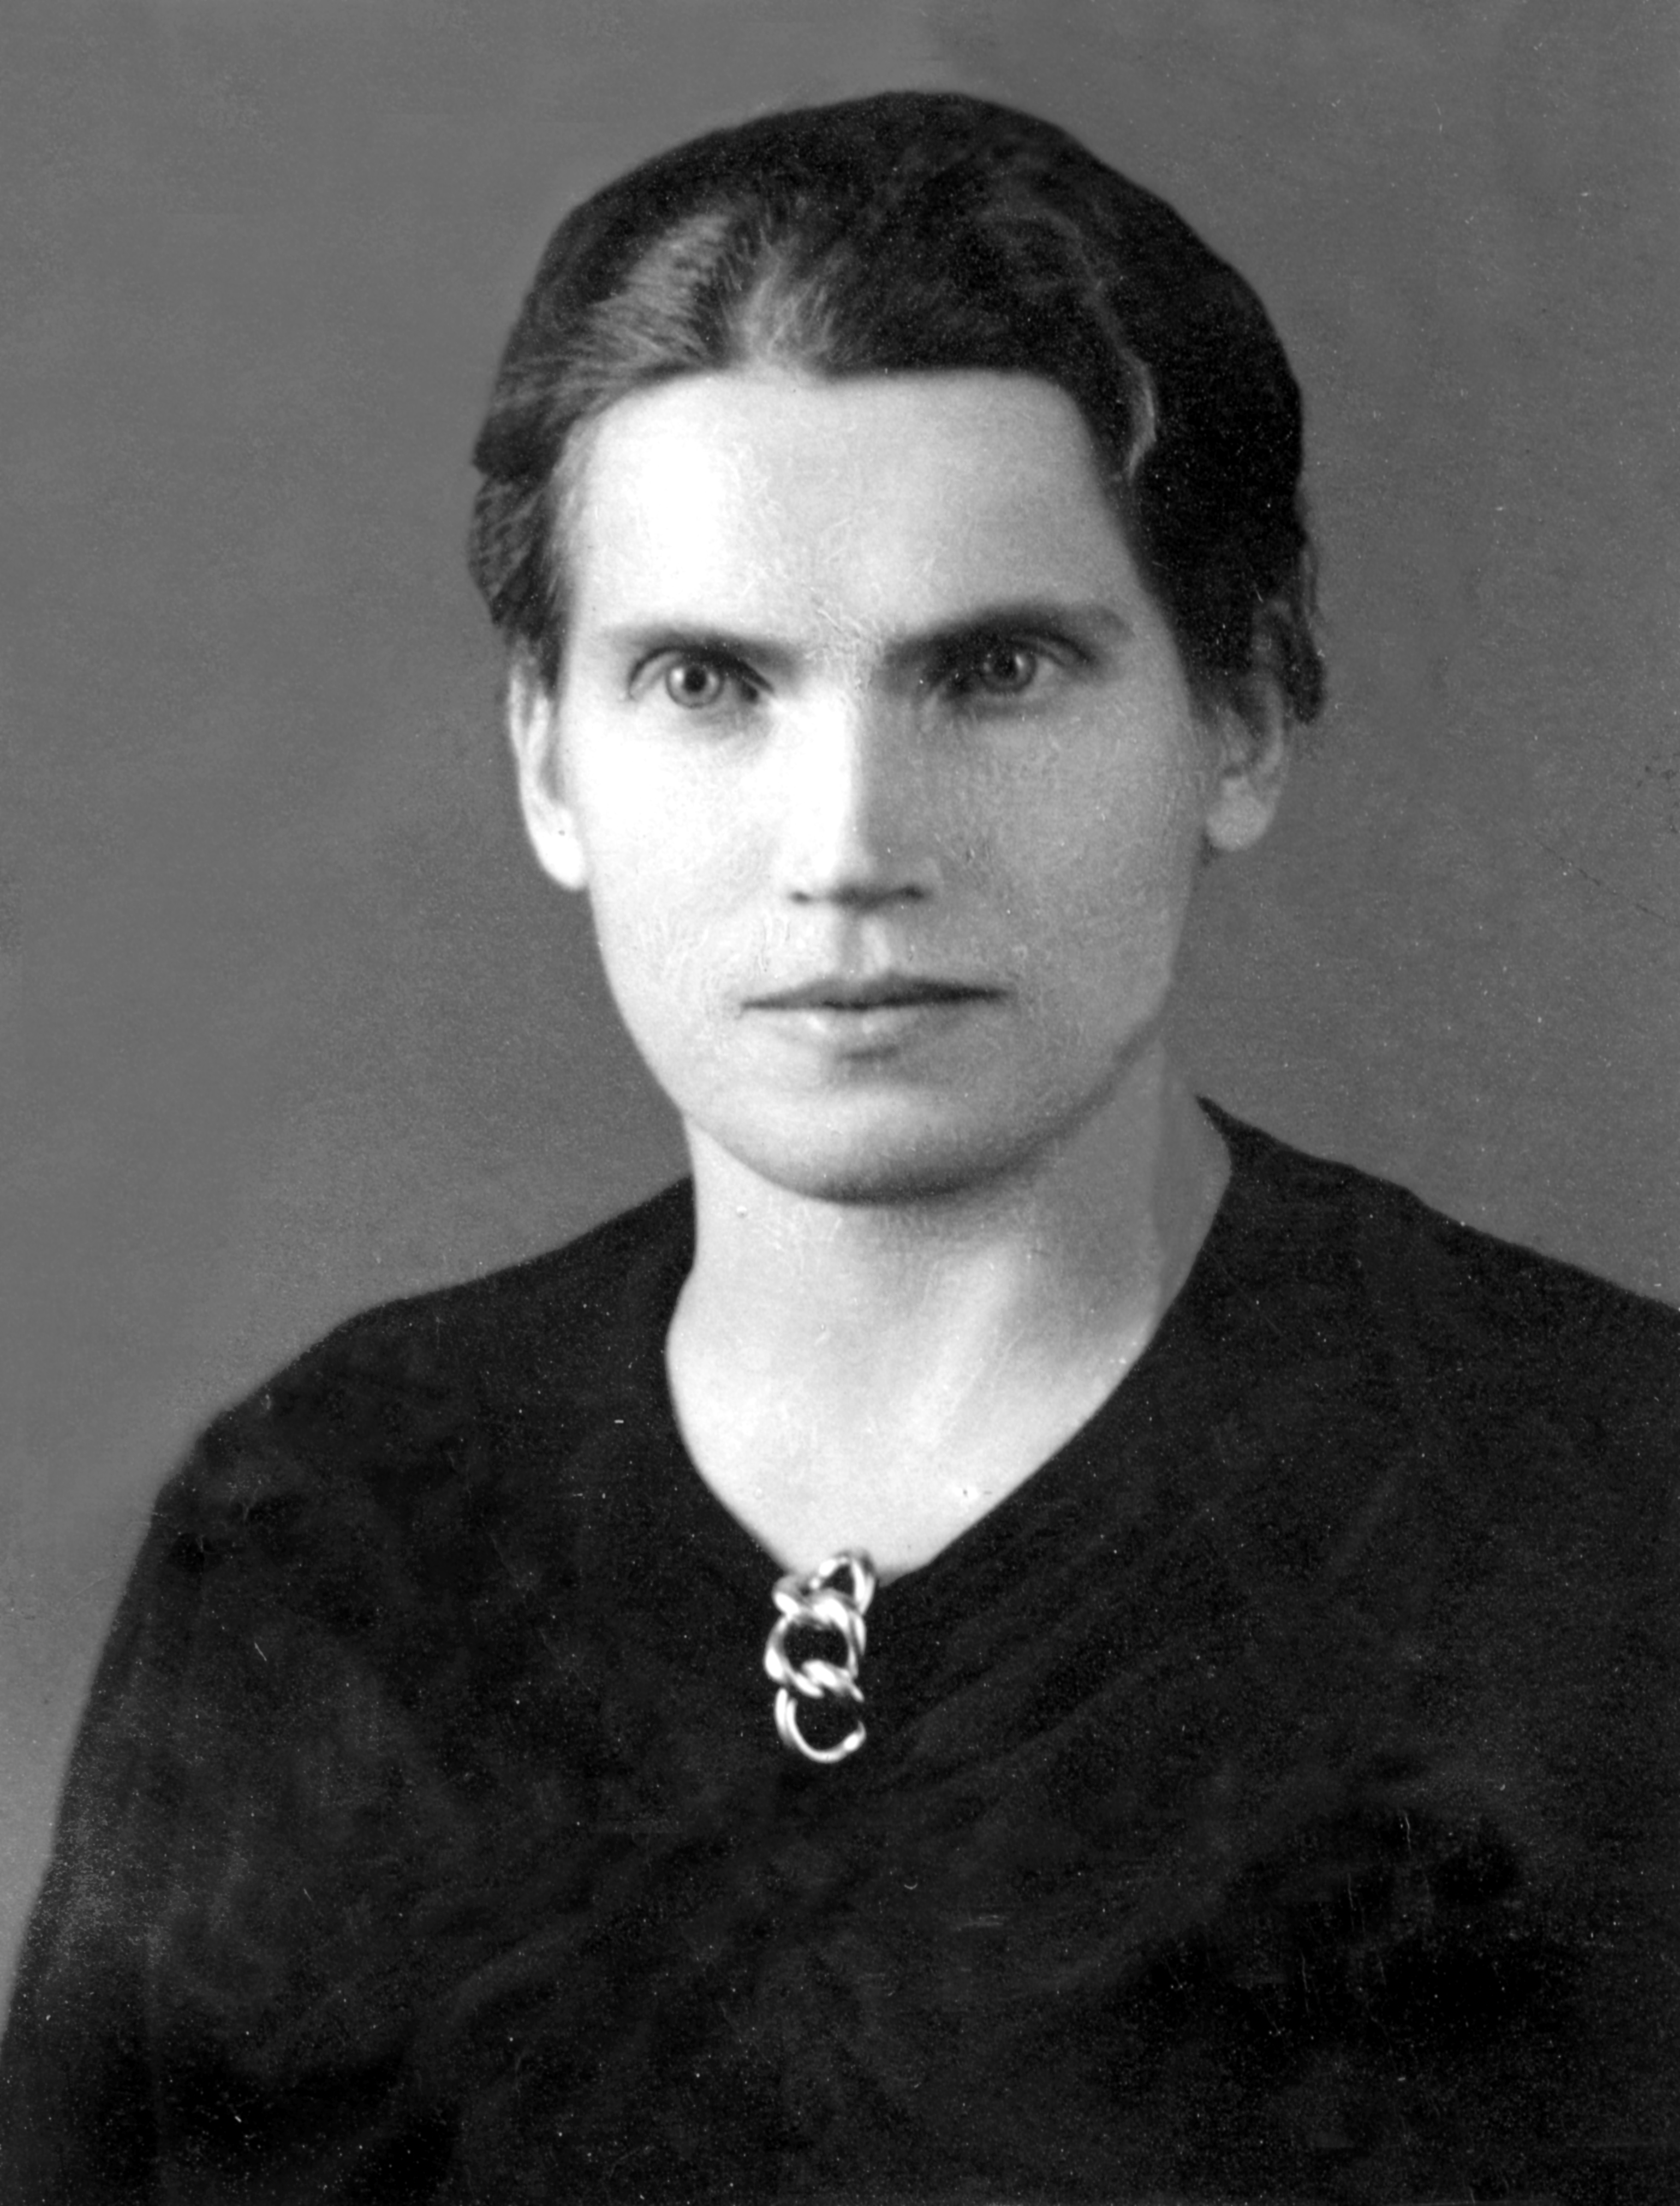 Portrait of Kubašec, taken around 1930